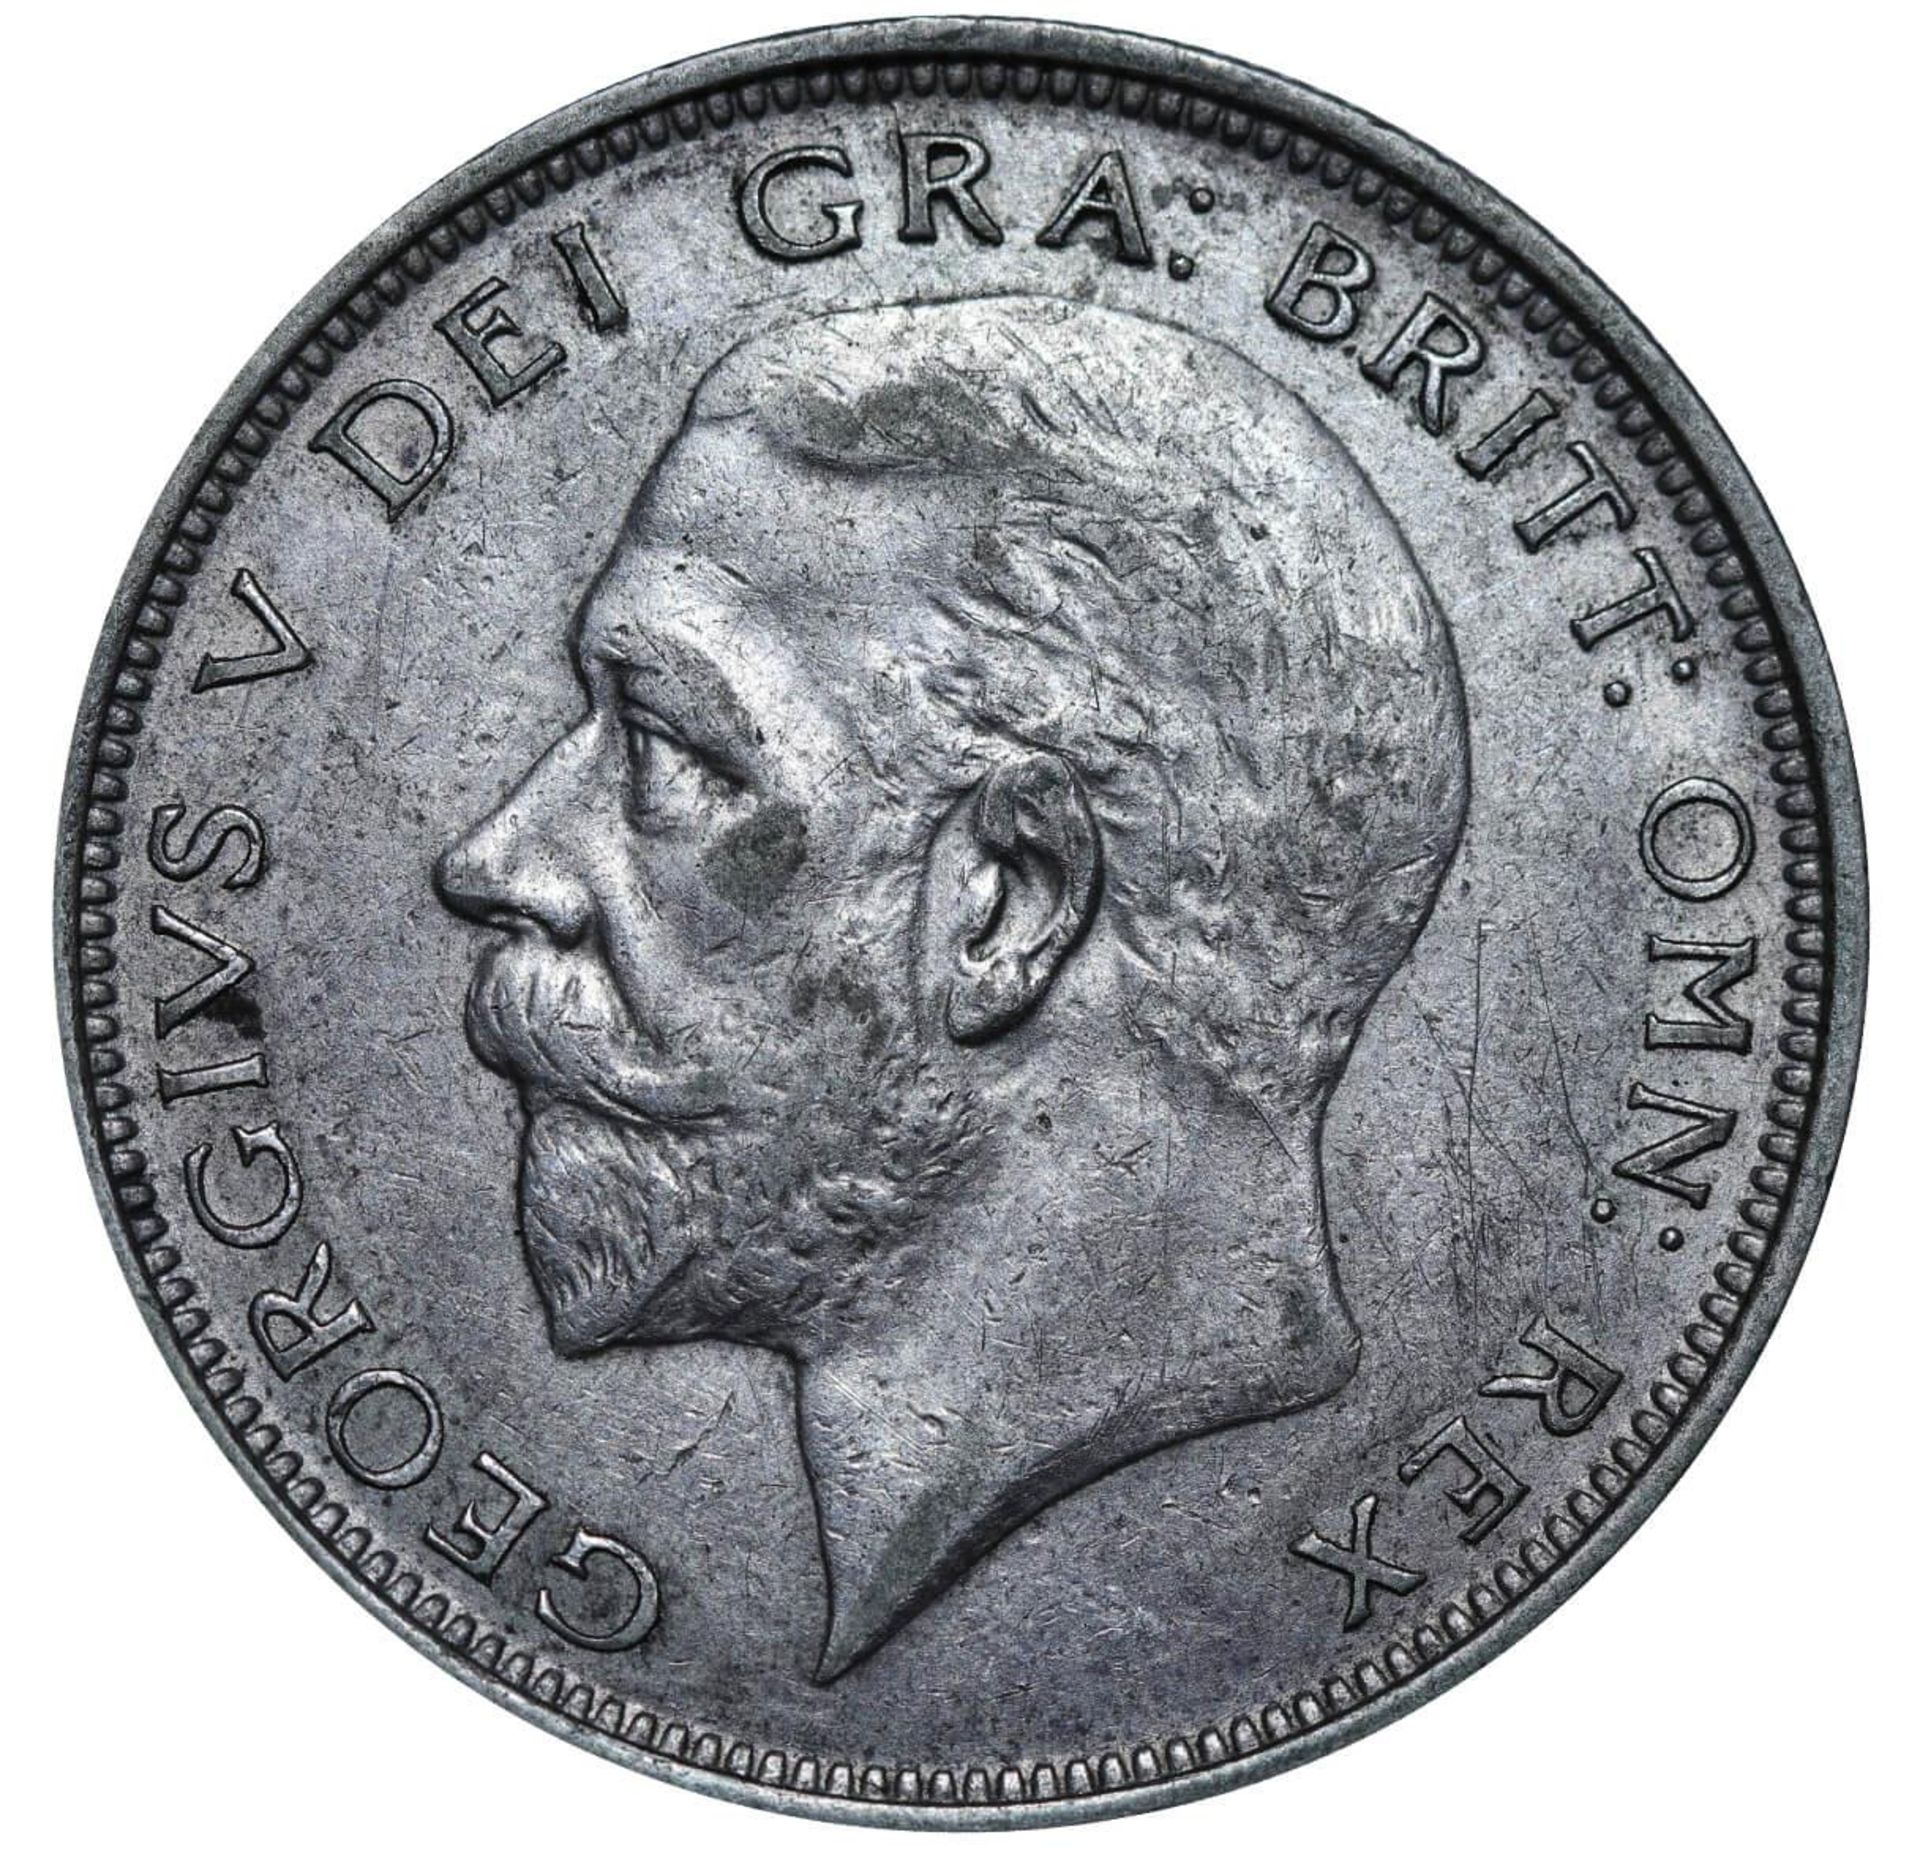 United Kingdom, ½ Crown, 1927 year - Image 2 of 3